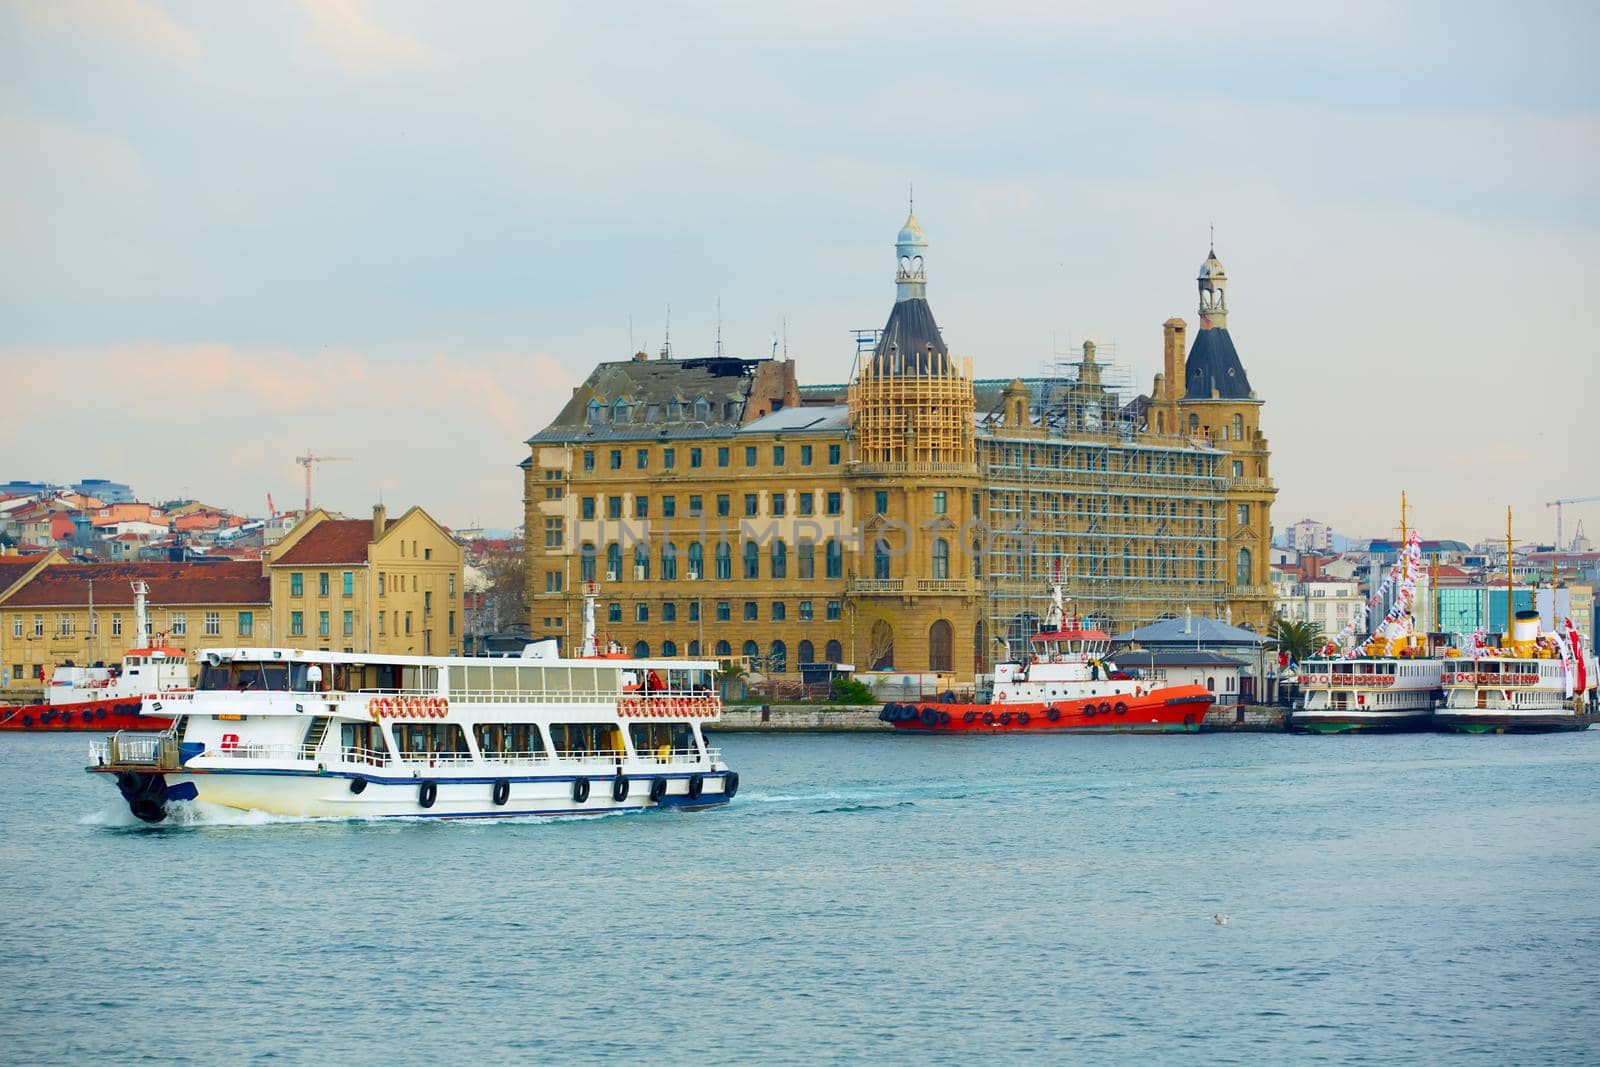 Passenger ships in the Kadikoy sea port, Istanbul, Turkey.